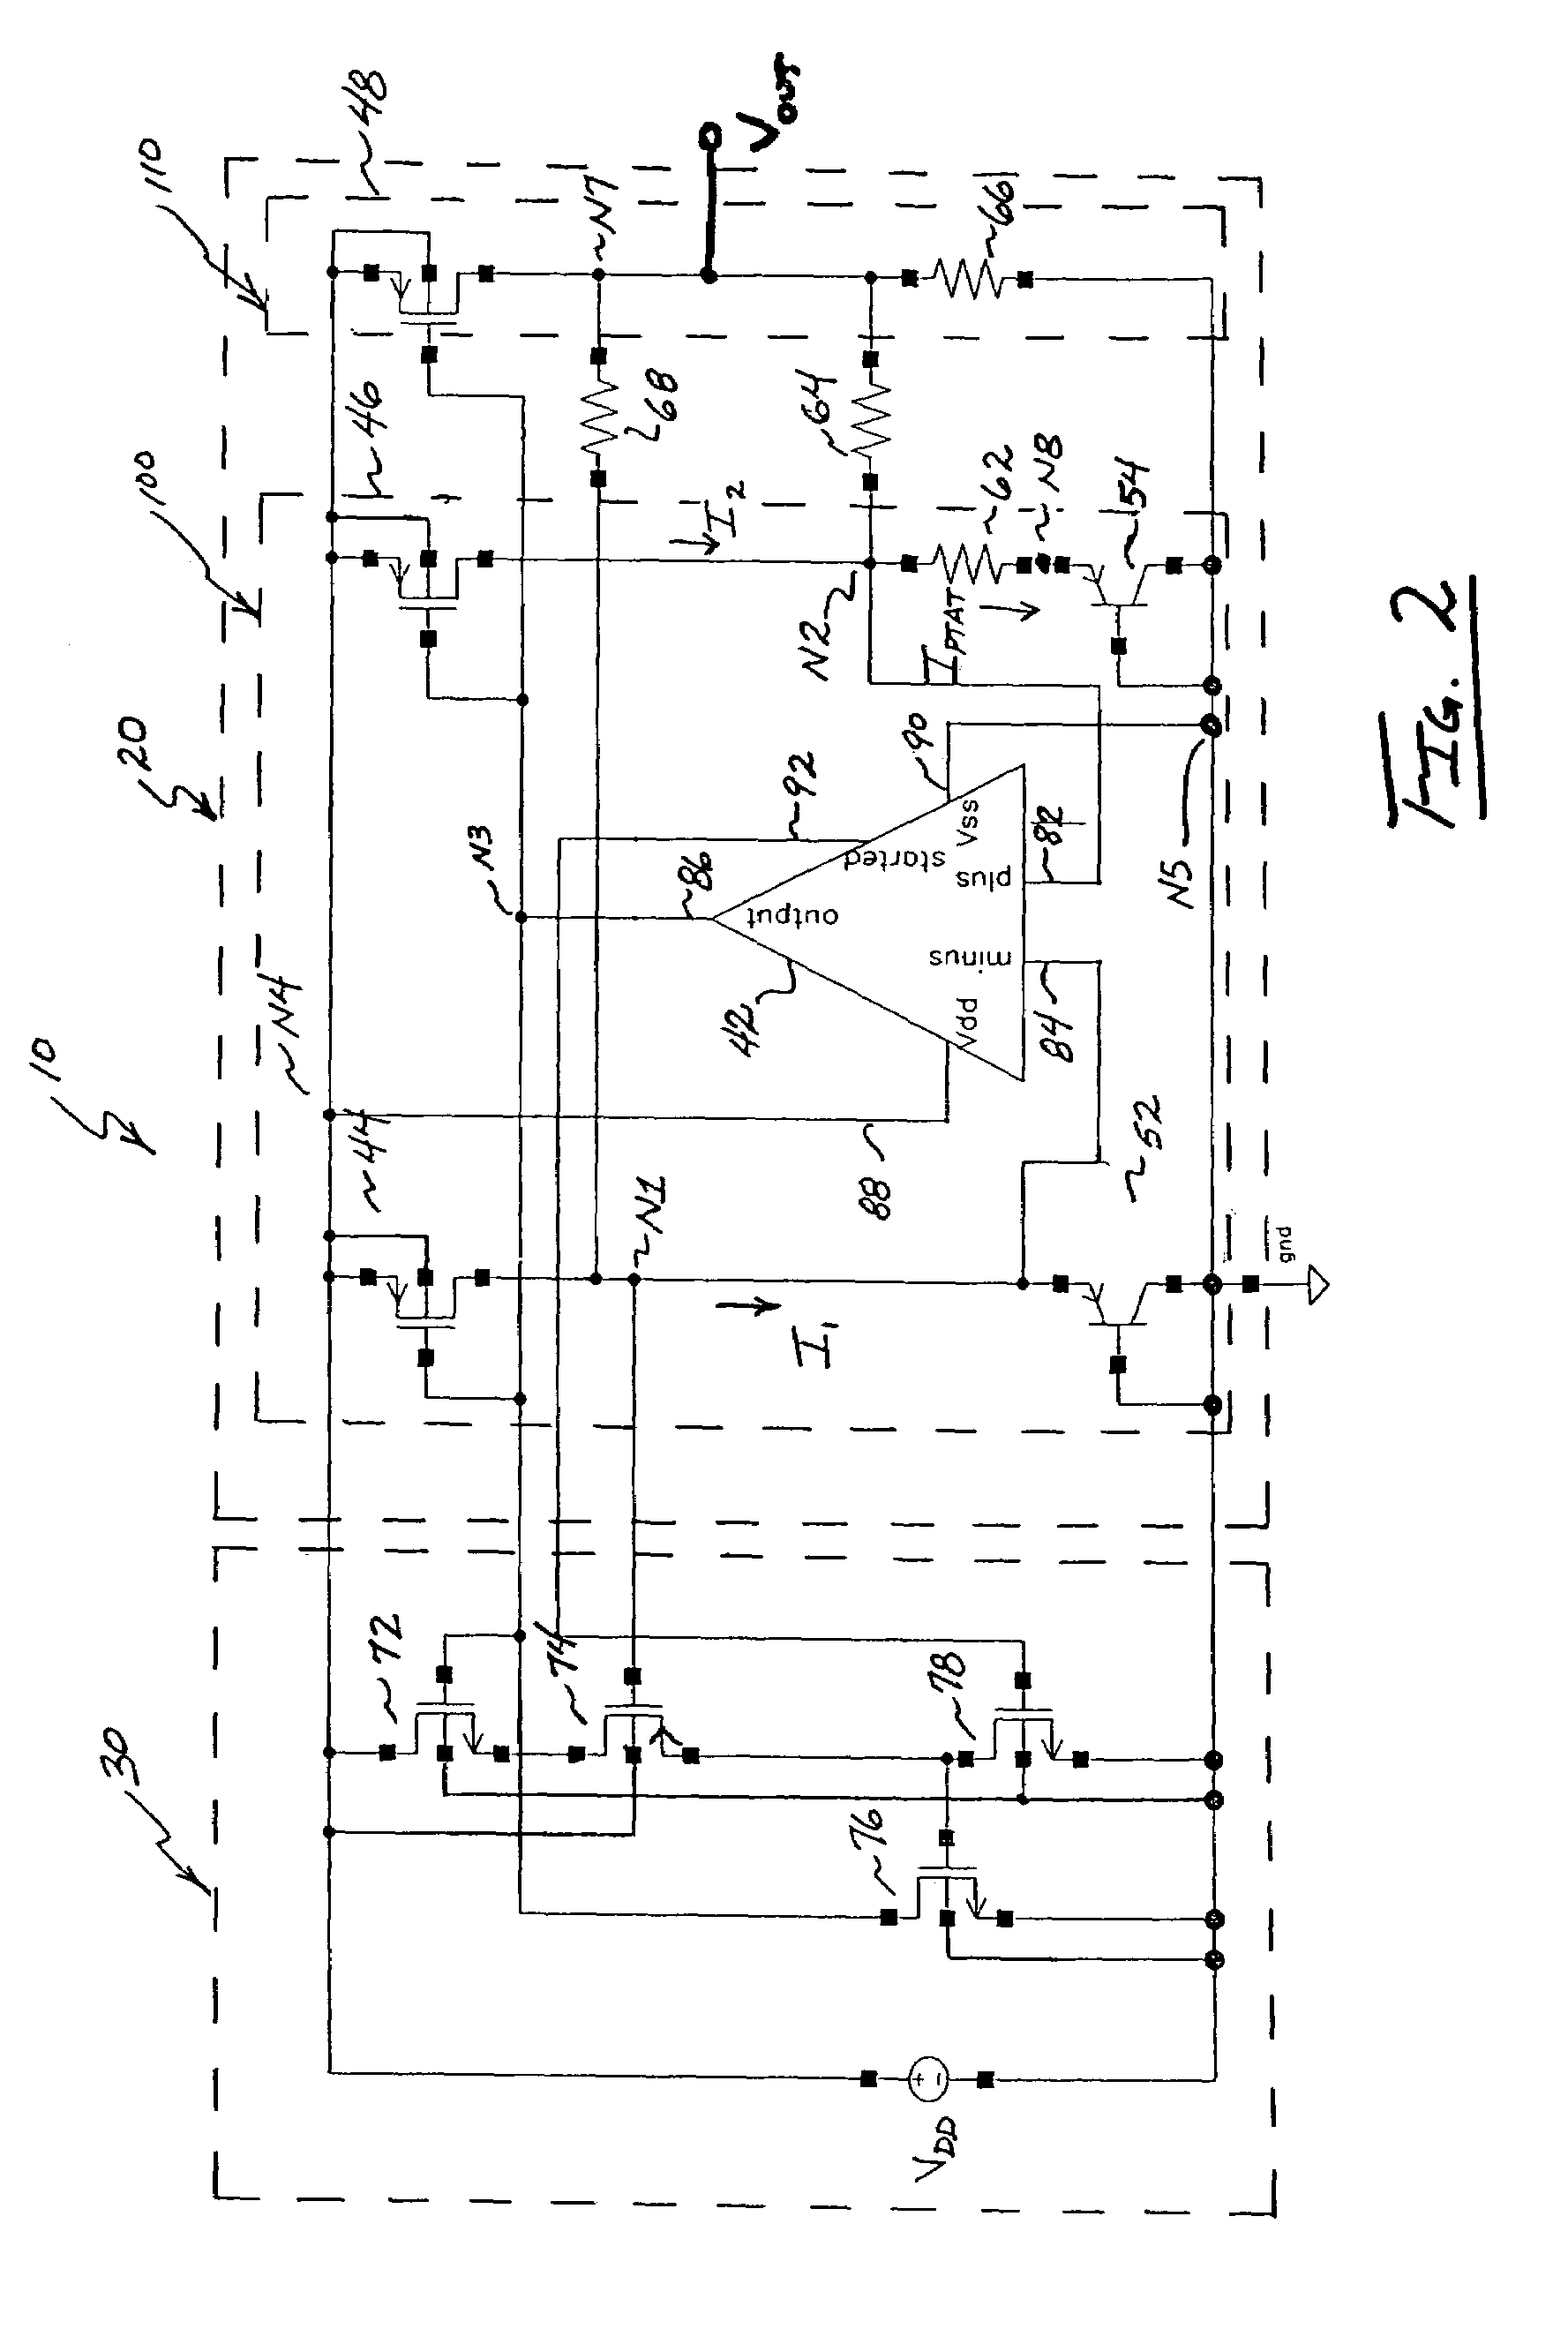 Low-voltage bandgap voltage reference circuit